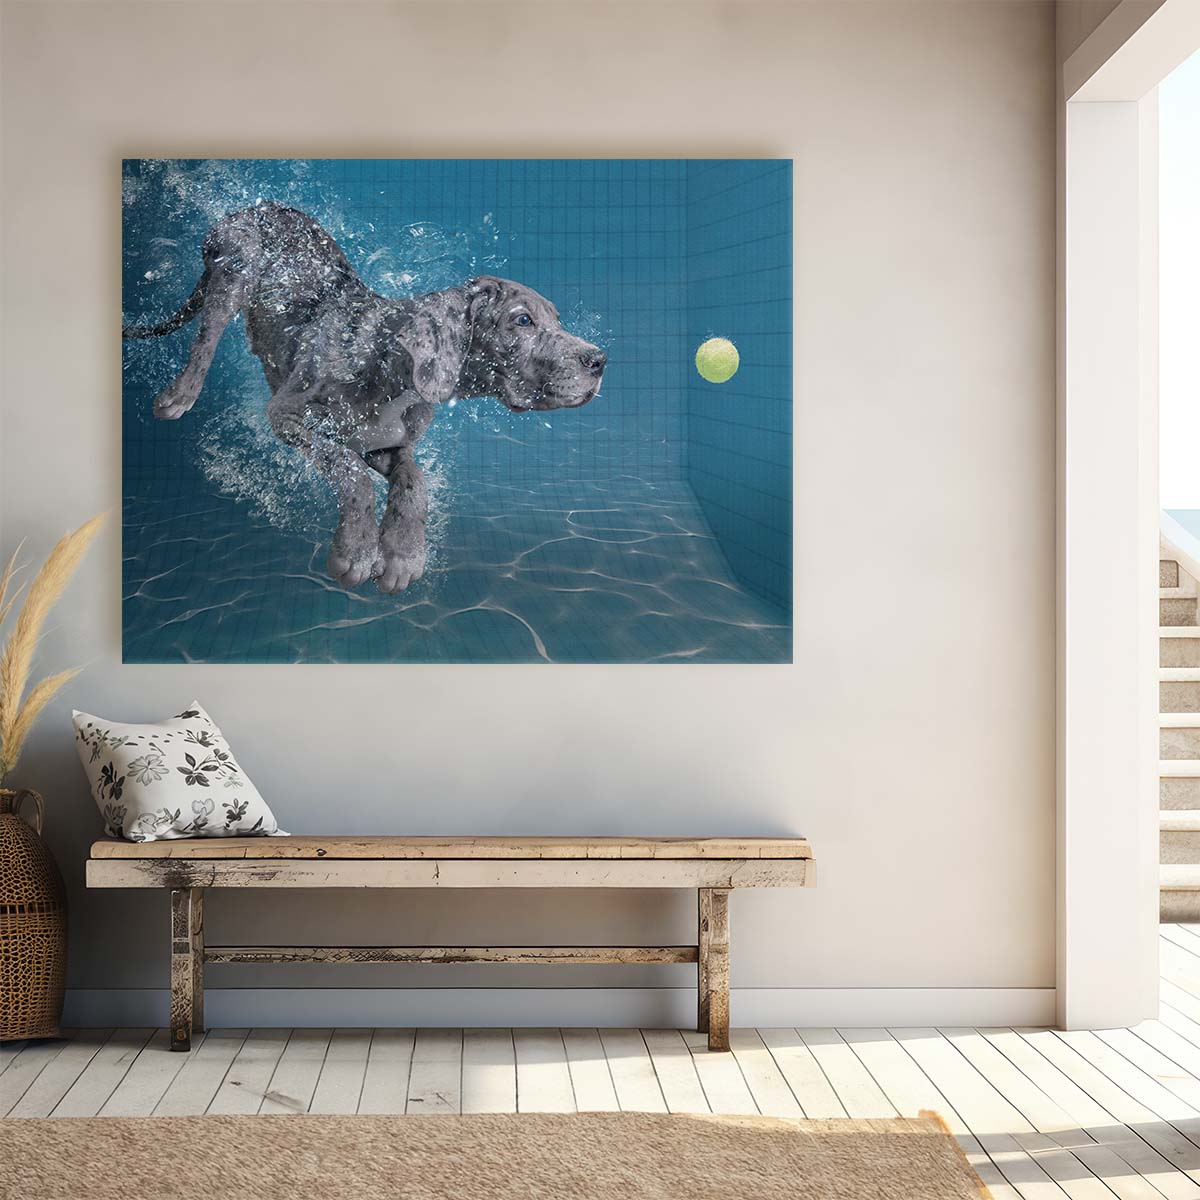 Underwater Dog Chasing Tennis Ball - Humorous Pet Photography Wall Art